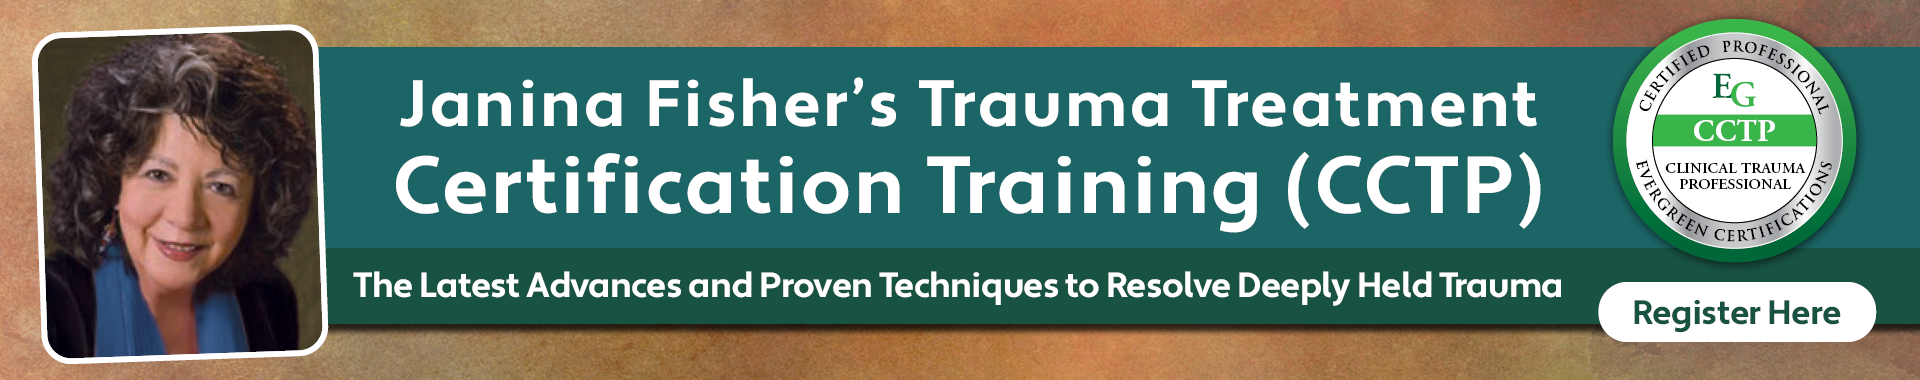 Janina Fisher's Trauma Treatment Certification Training